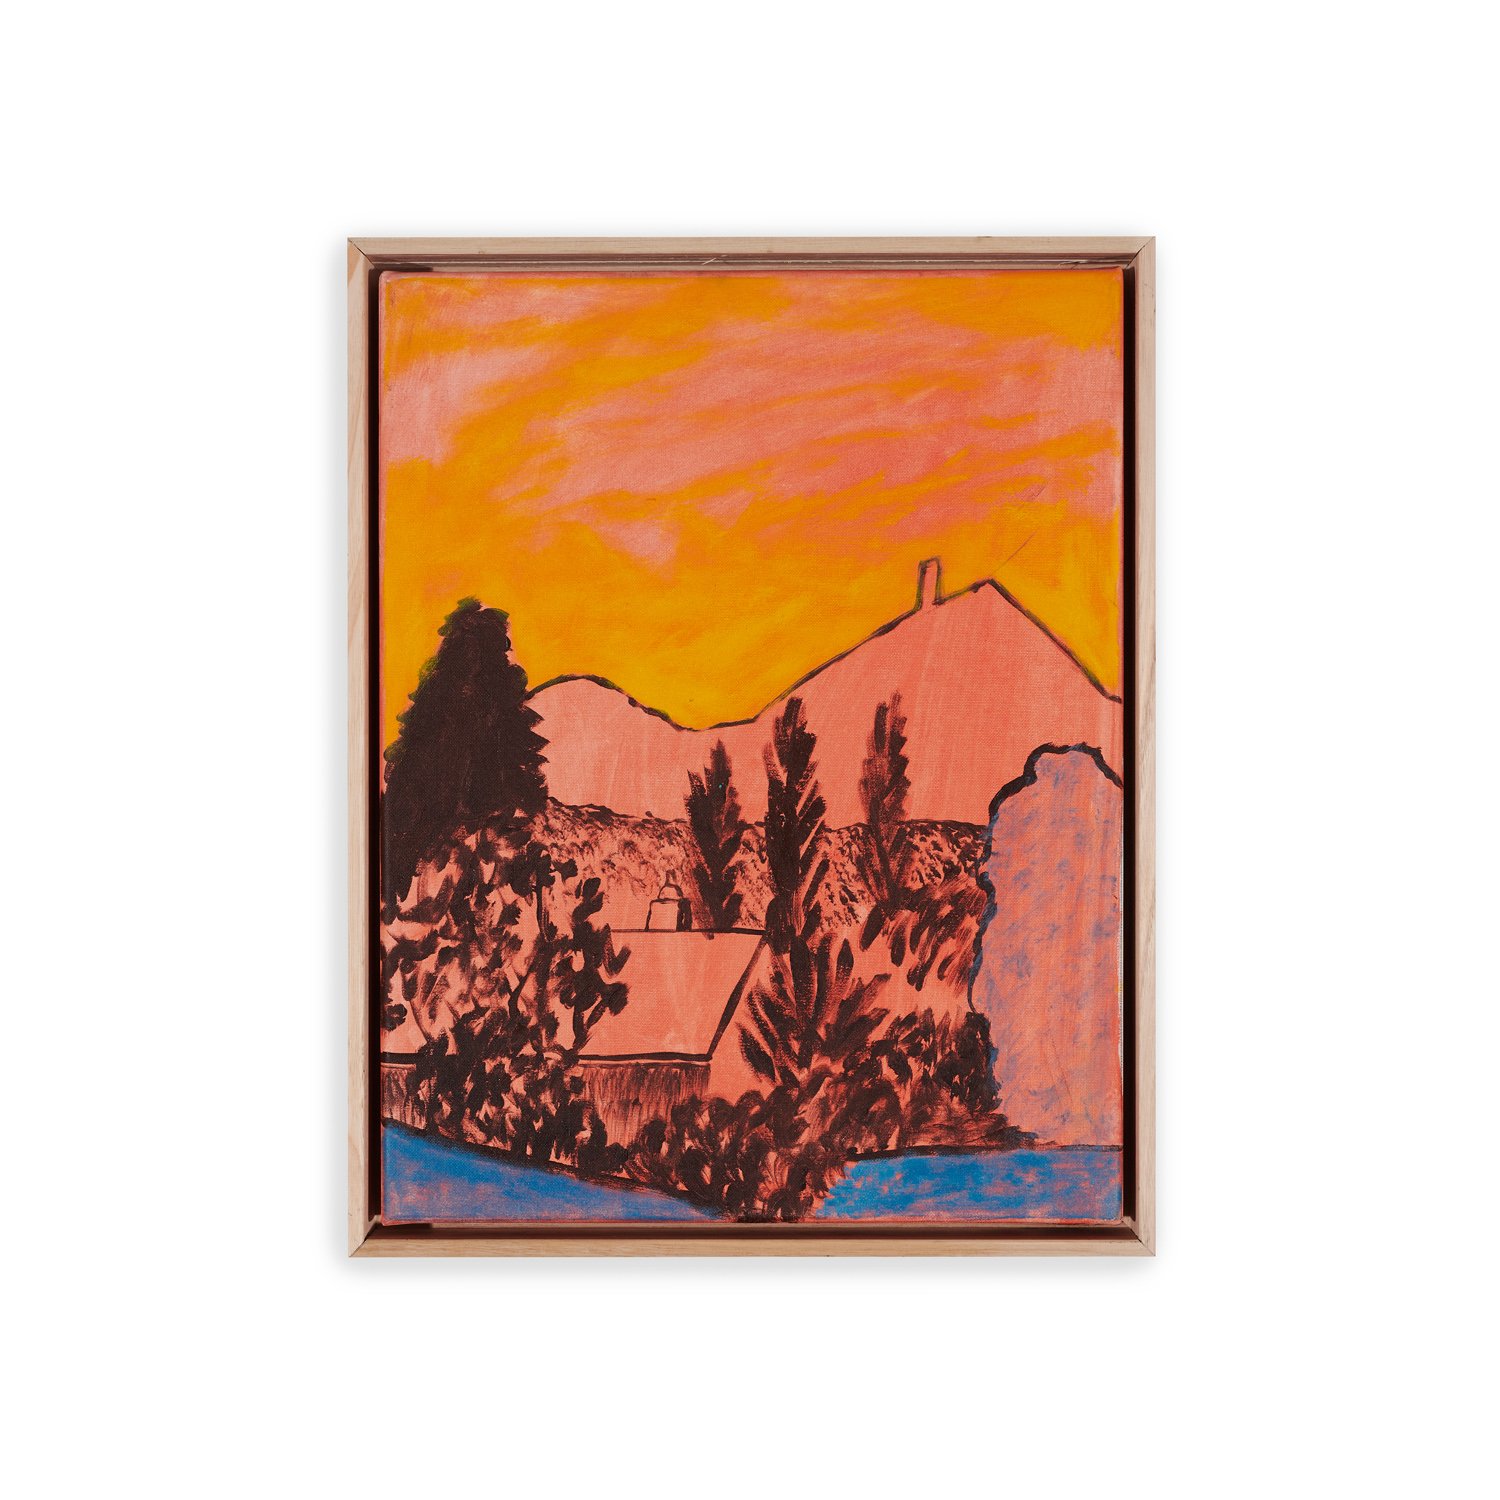 sun-decked desert and evergreen valleys 49cmx38cm Oil on Canvas 1800.jpg